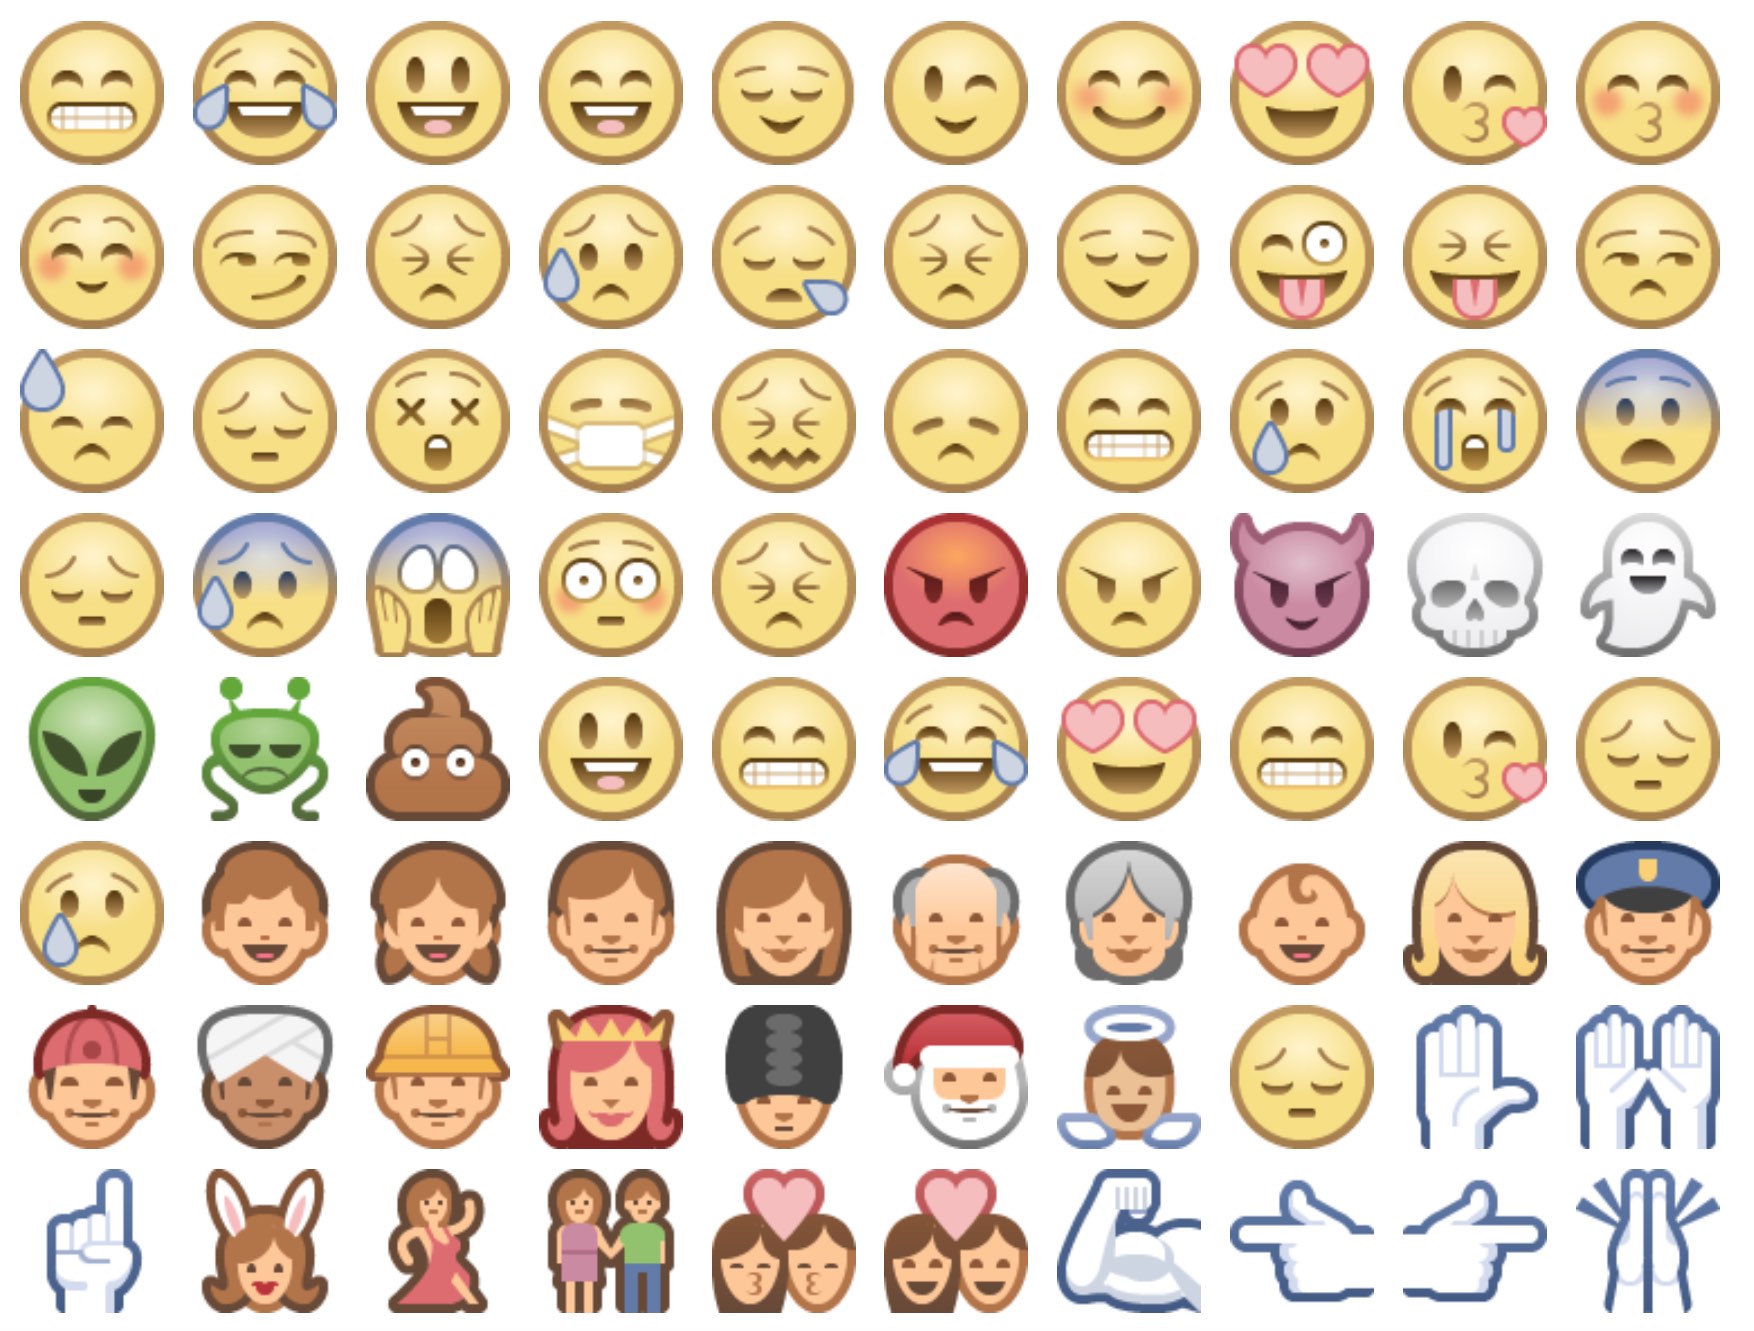 New Facebook Messenger Emojis are Stunning